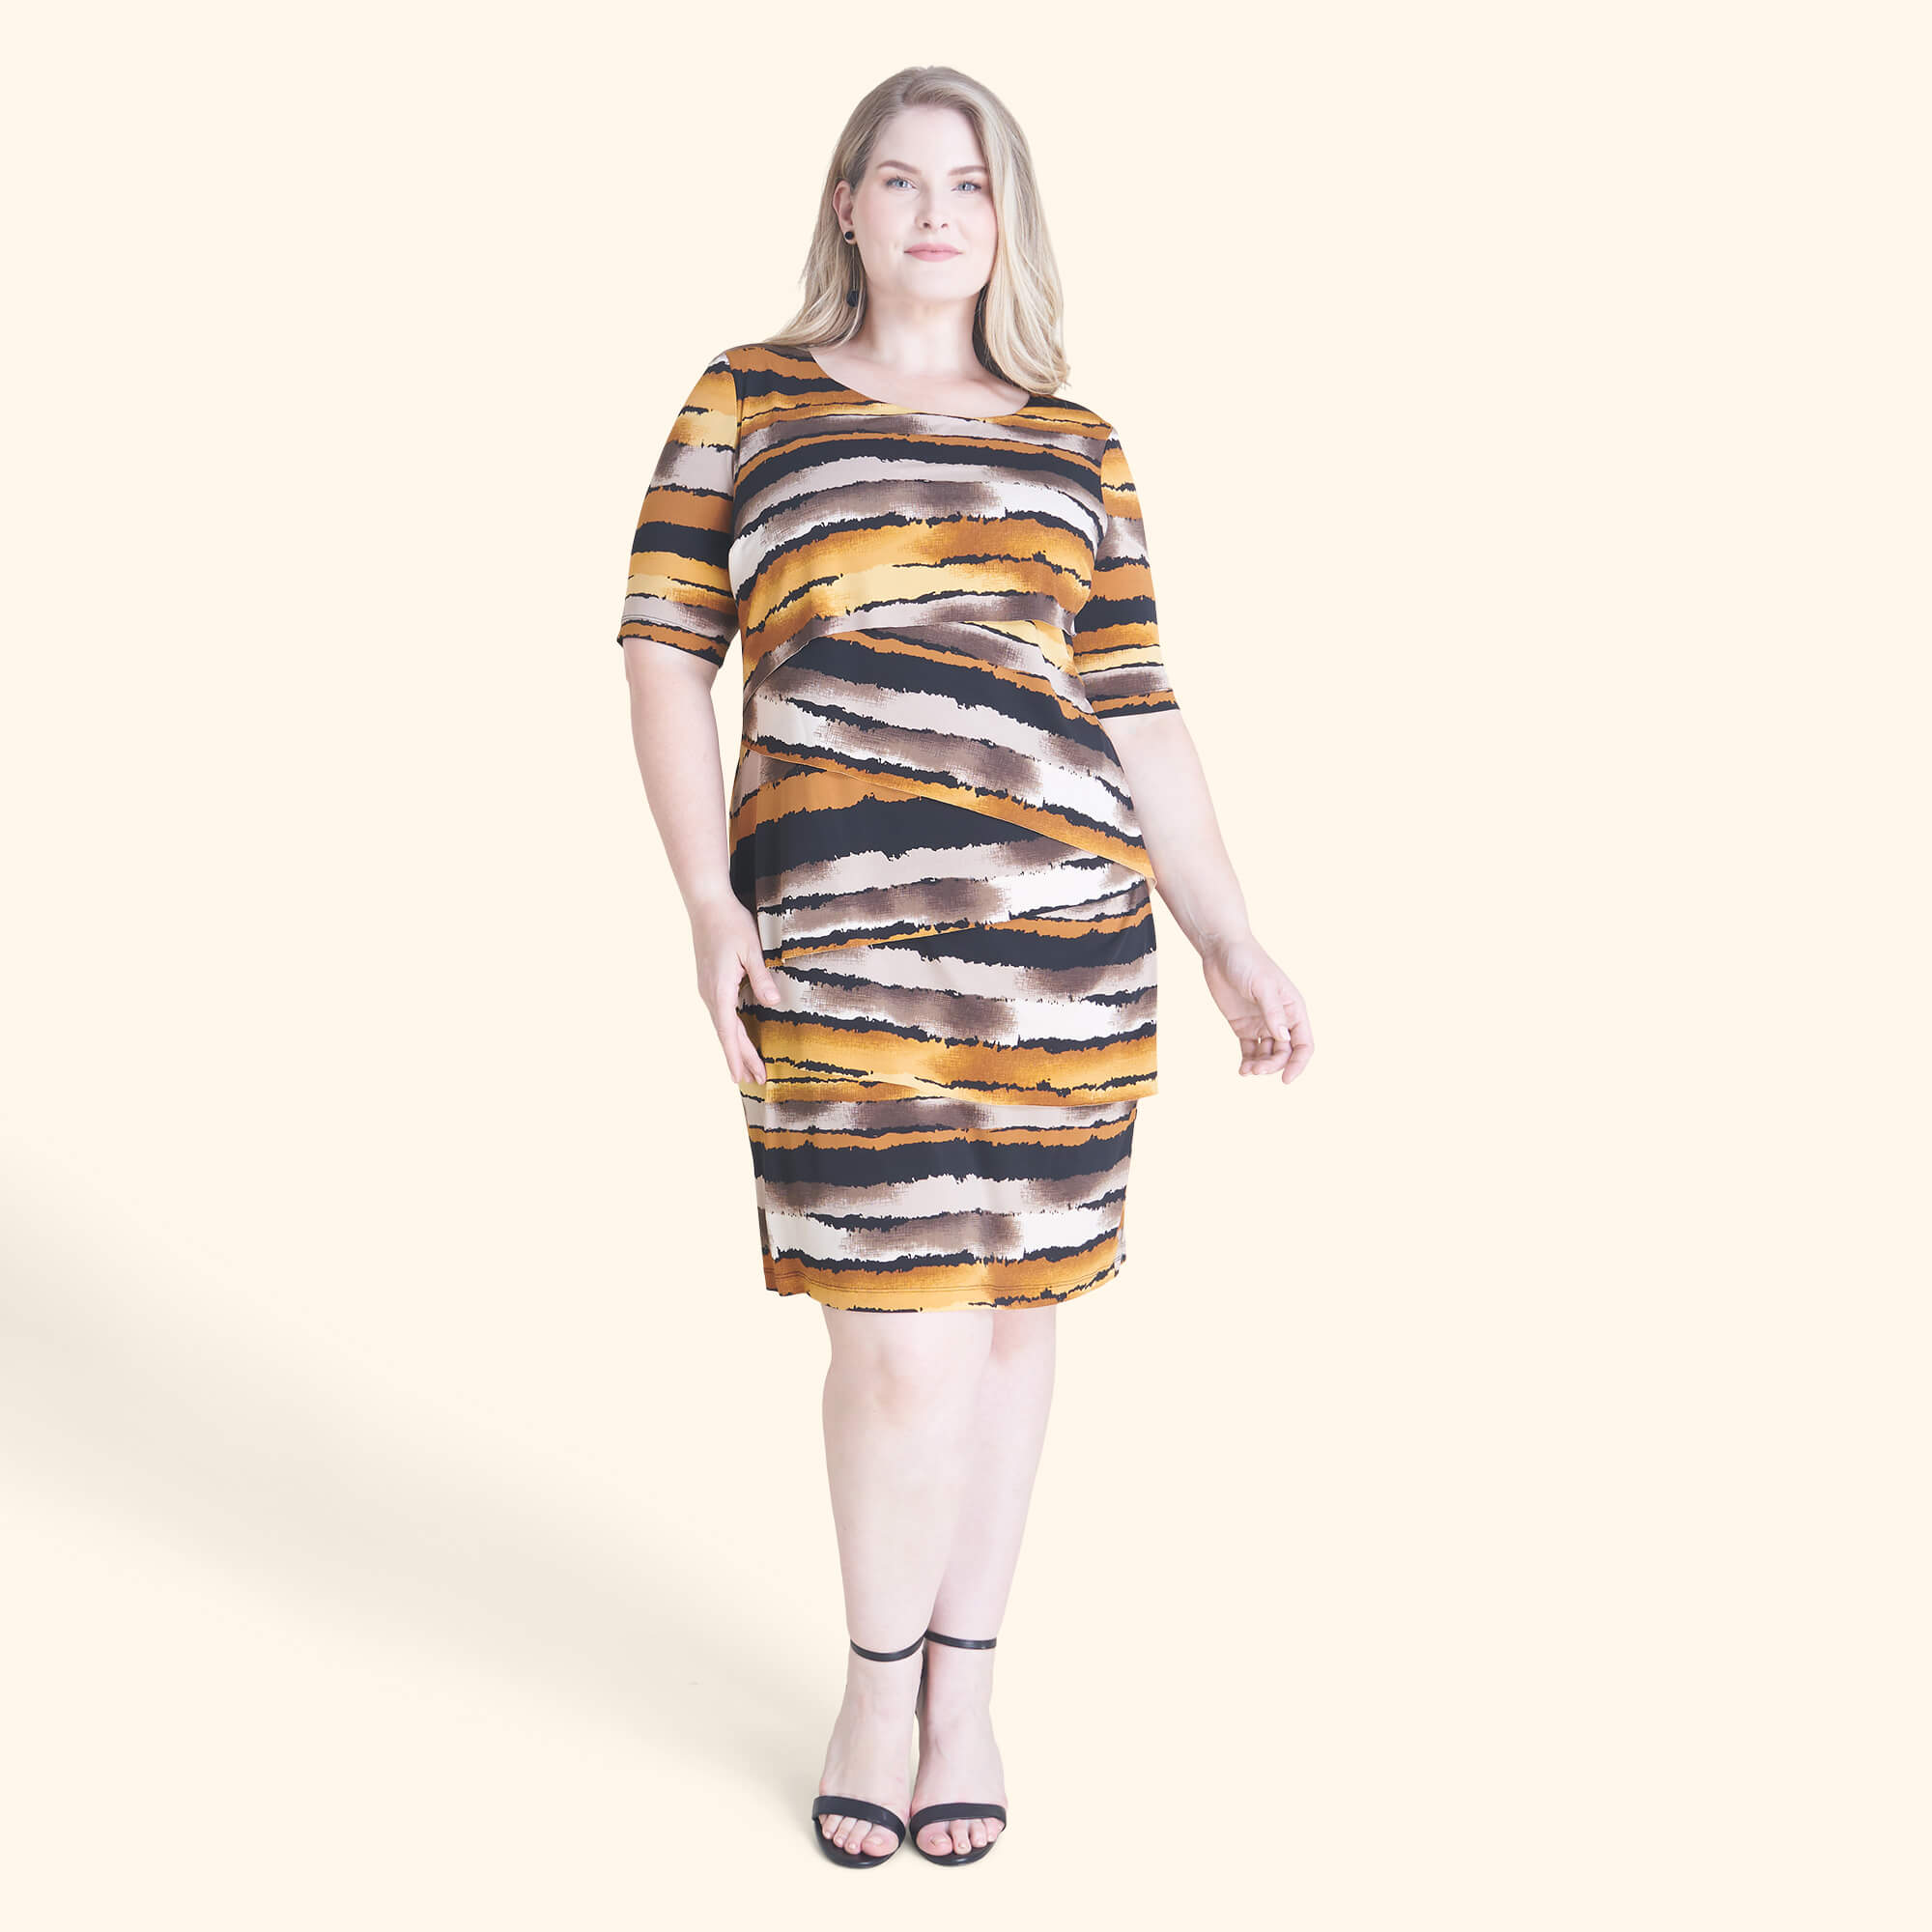 Brandy Mustard Asymmetrical Layer Dress | Connected Apparel